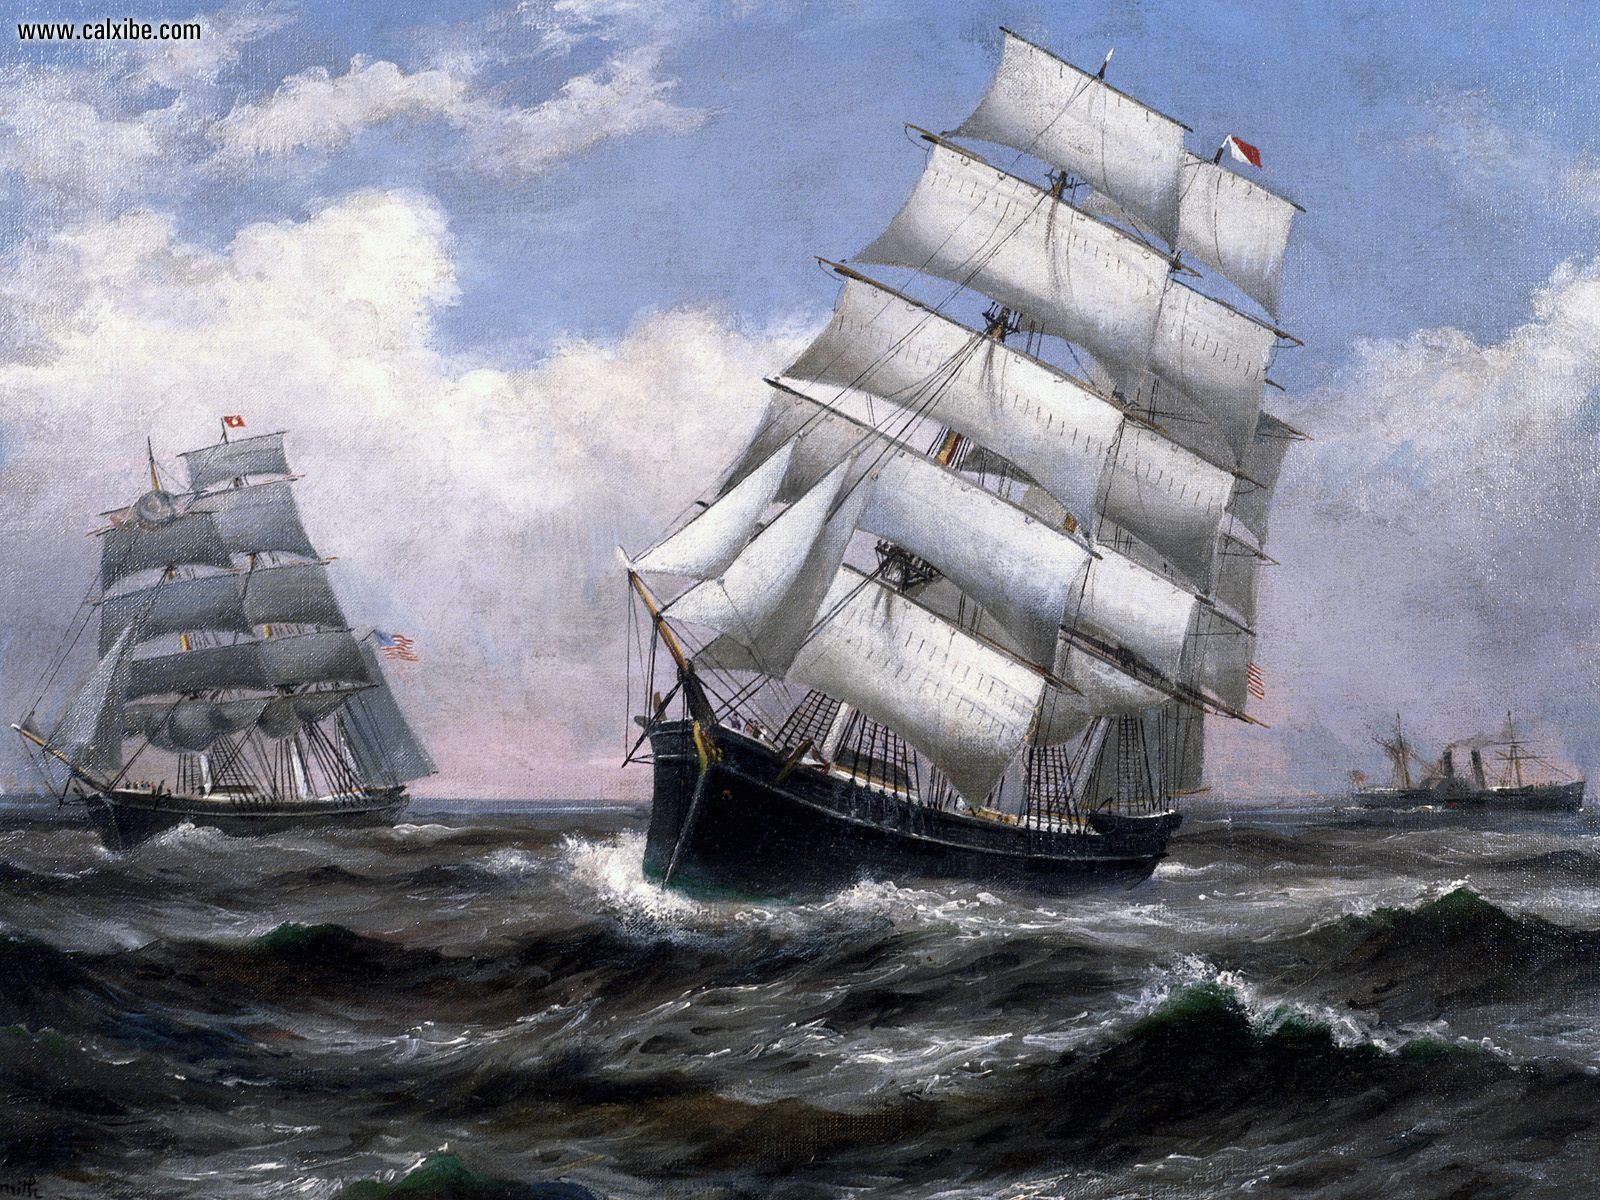 Romance Bandits 187 sailing